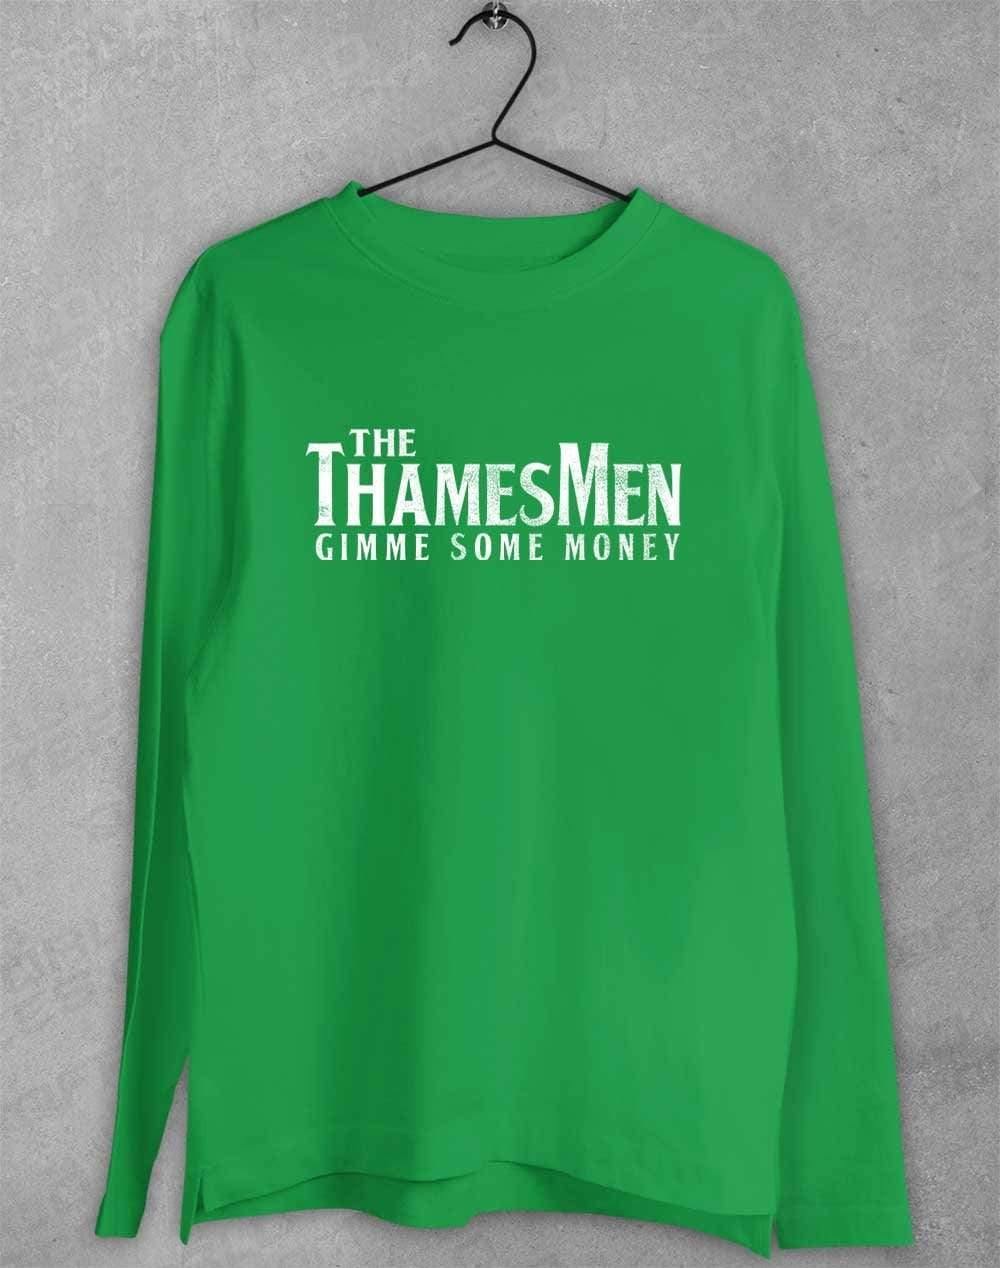 The Thamesmen Gimme Some Money Long Sleeve T-Shirt S / Irish Green  - Off World Tees